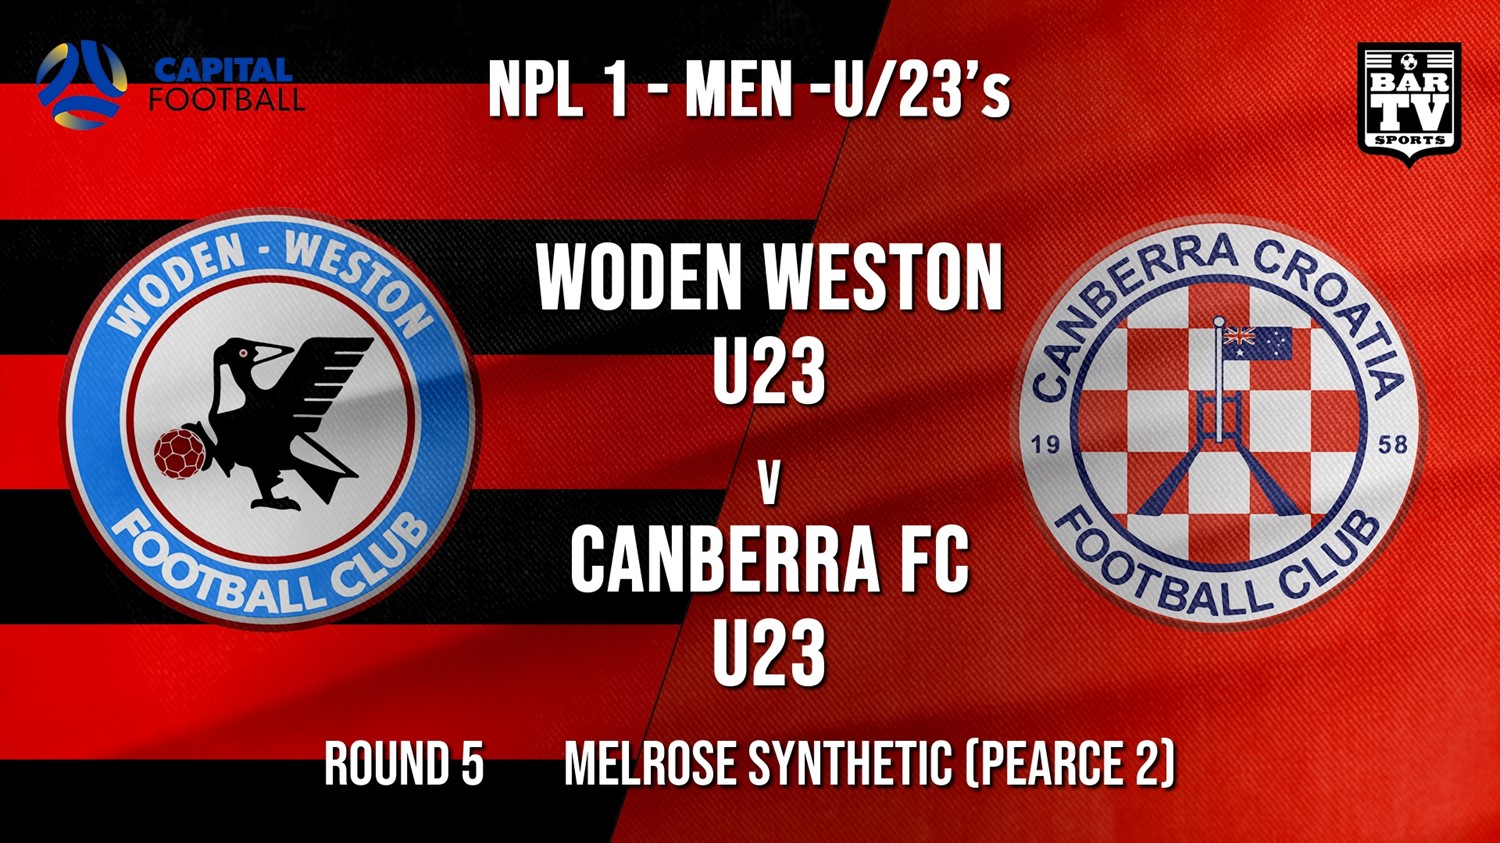 NPL1 Men - U23 - Capital Football  Round 5 - Woden Weston U23 v Canberra FC U23 Minigame Slate Image